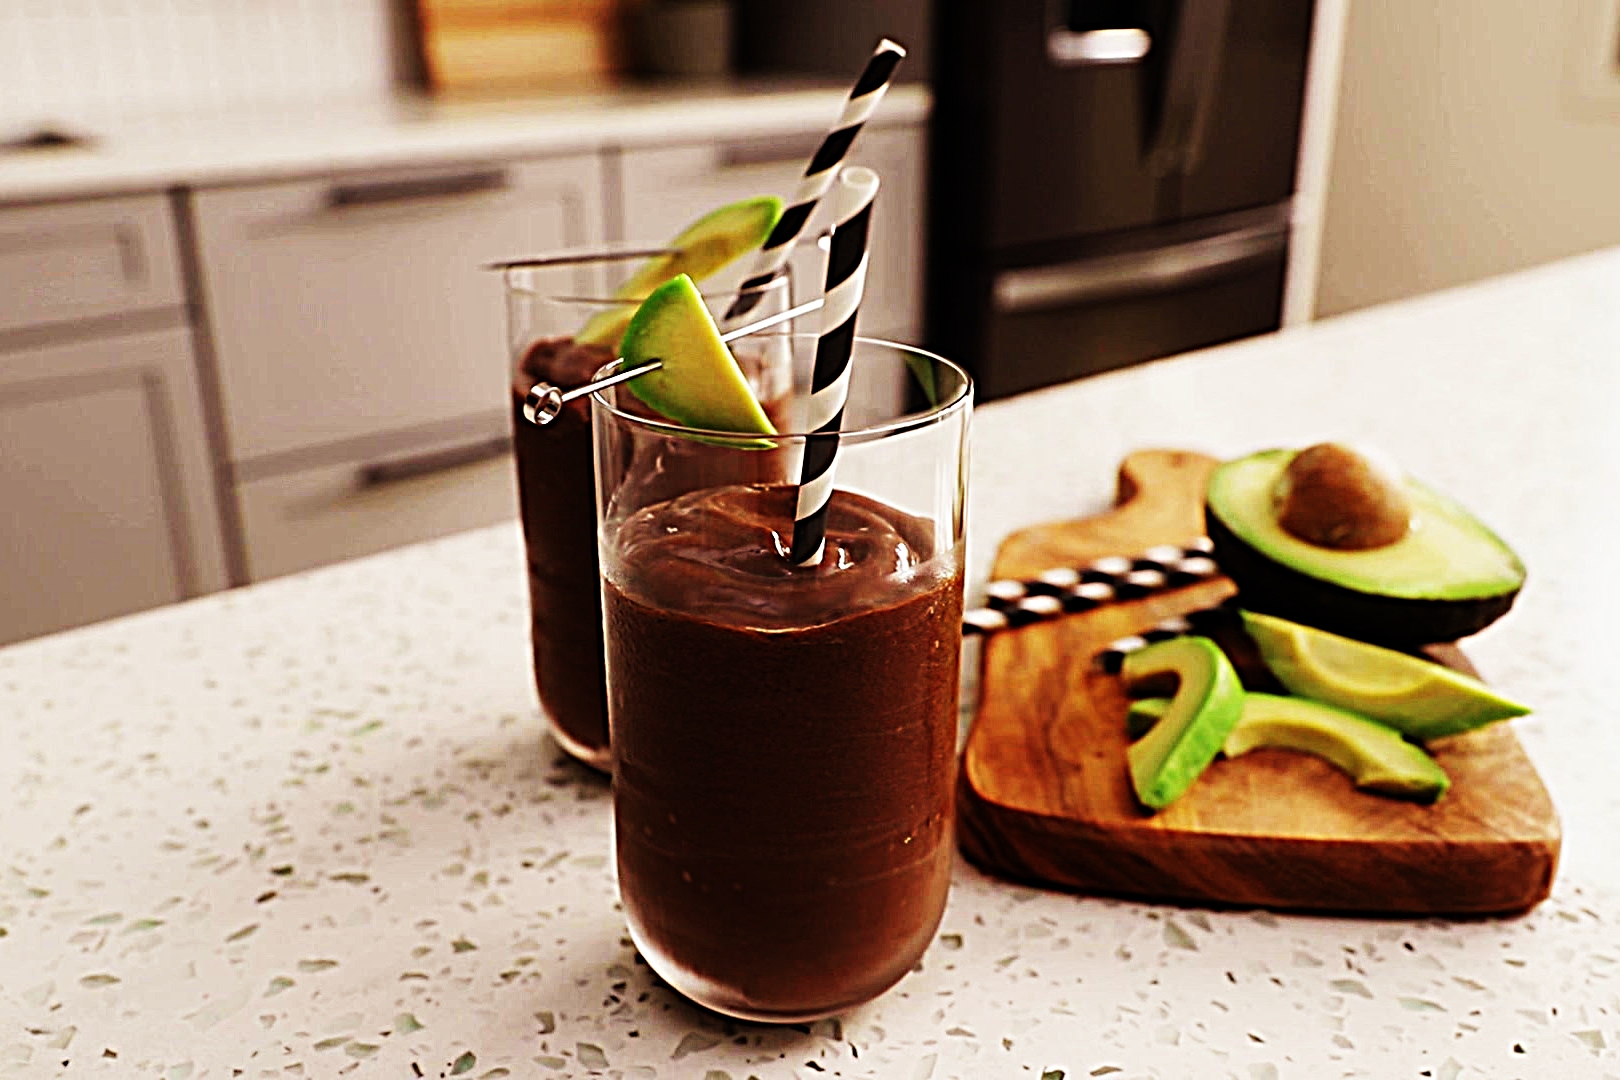 Stupid-Easy Recipe for Vegan Chocolate Avocado “Milkshakes” (#1 Top-Rated)